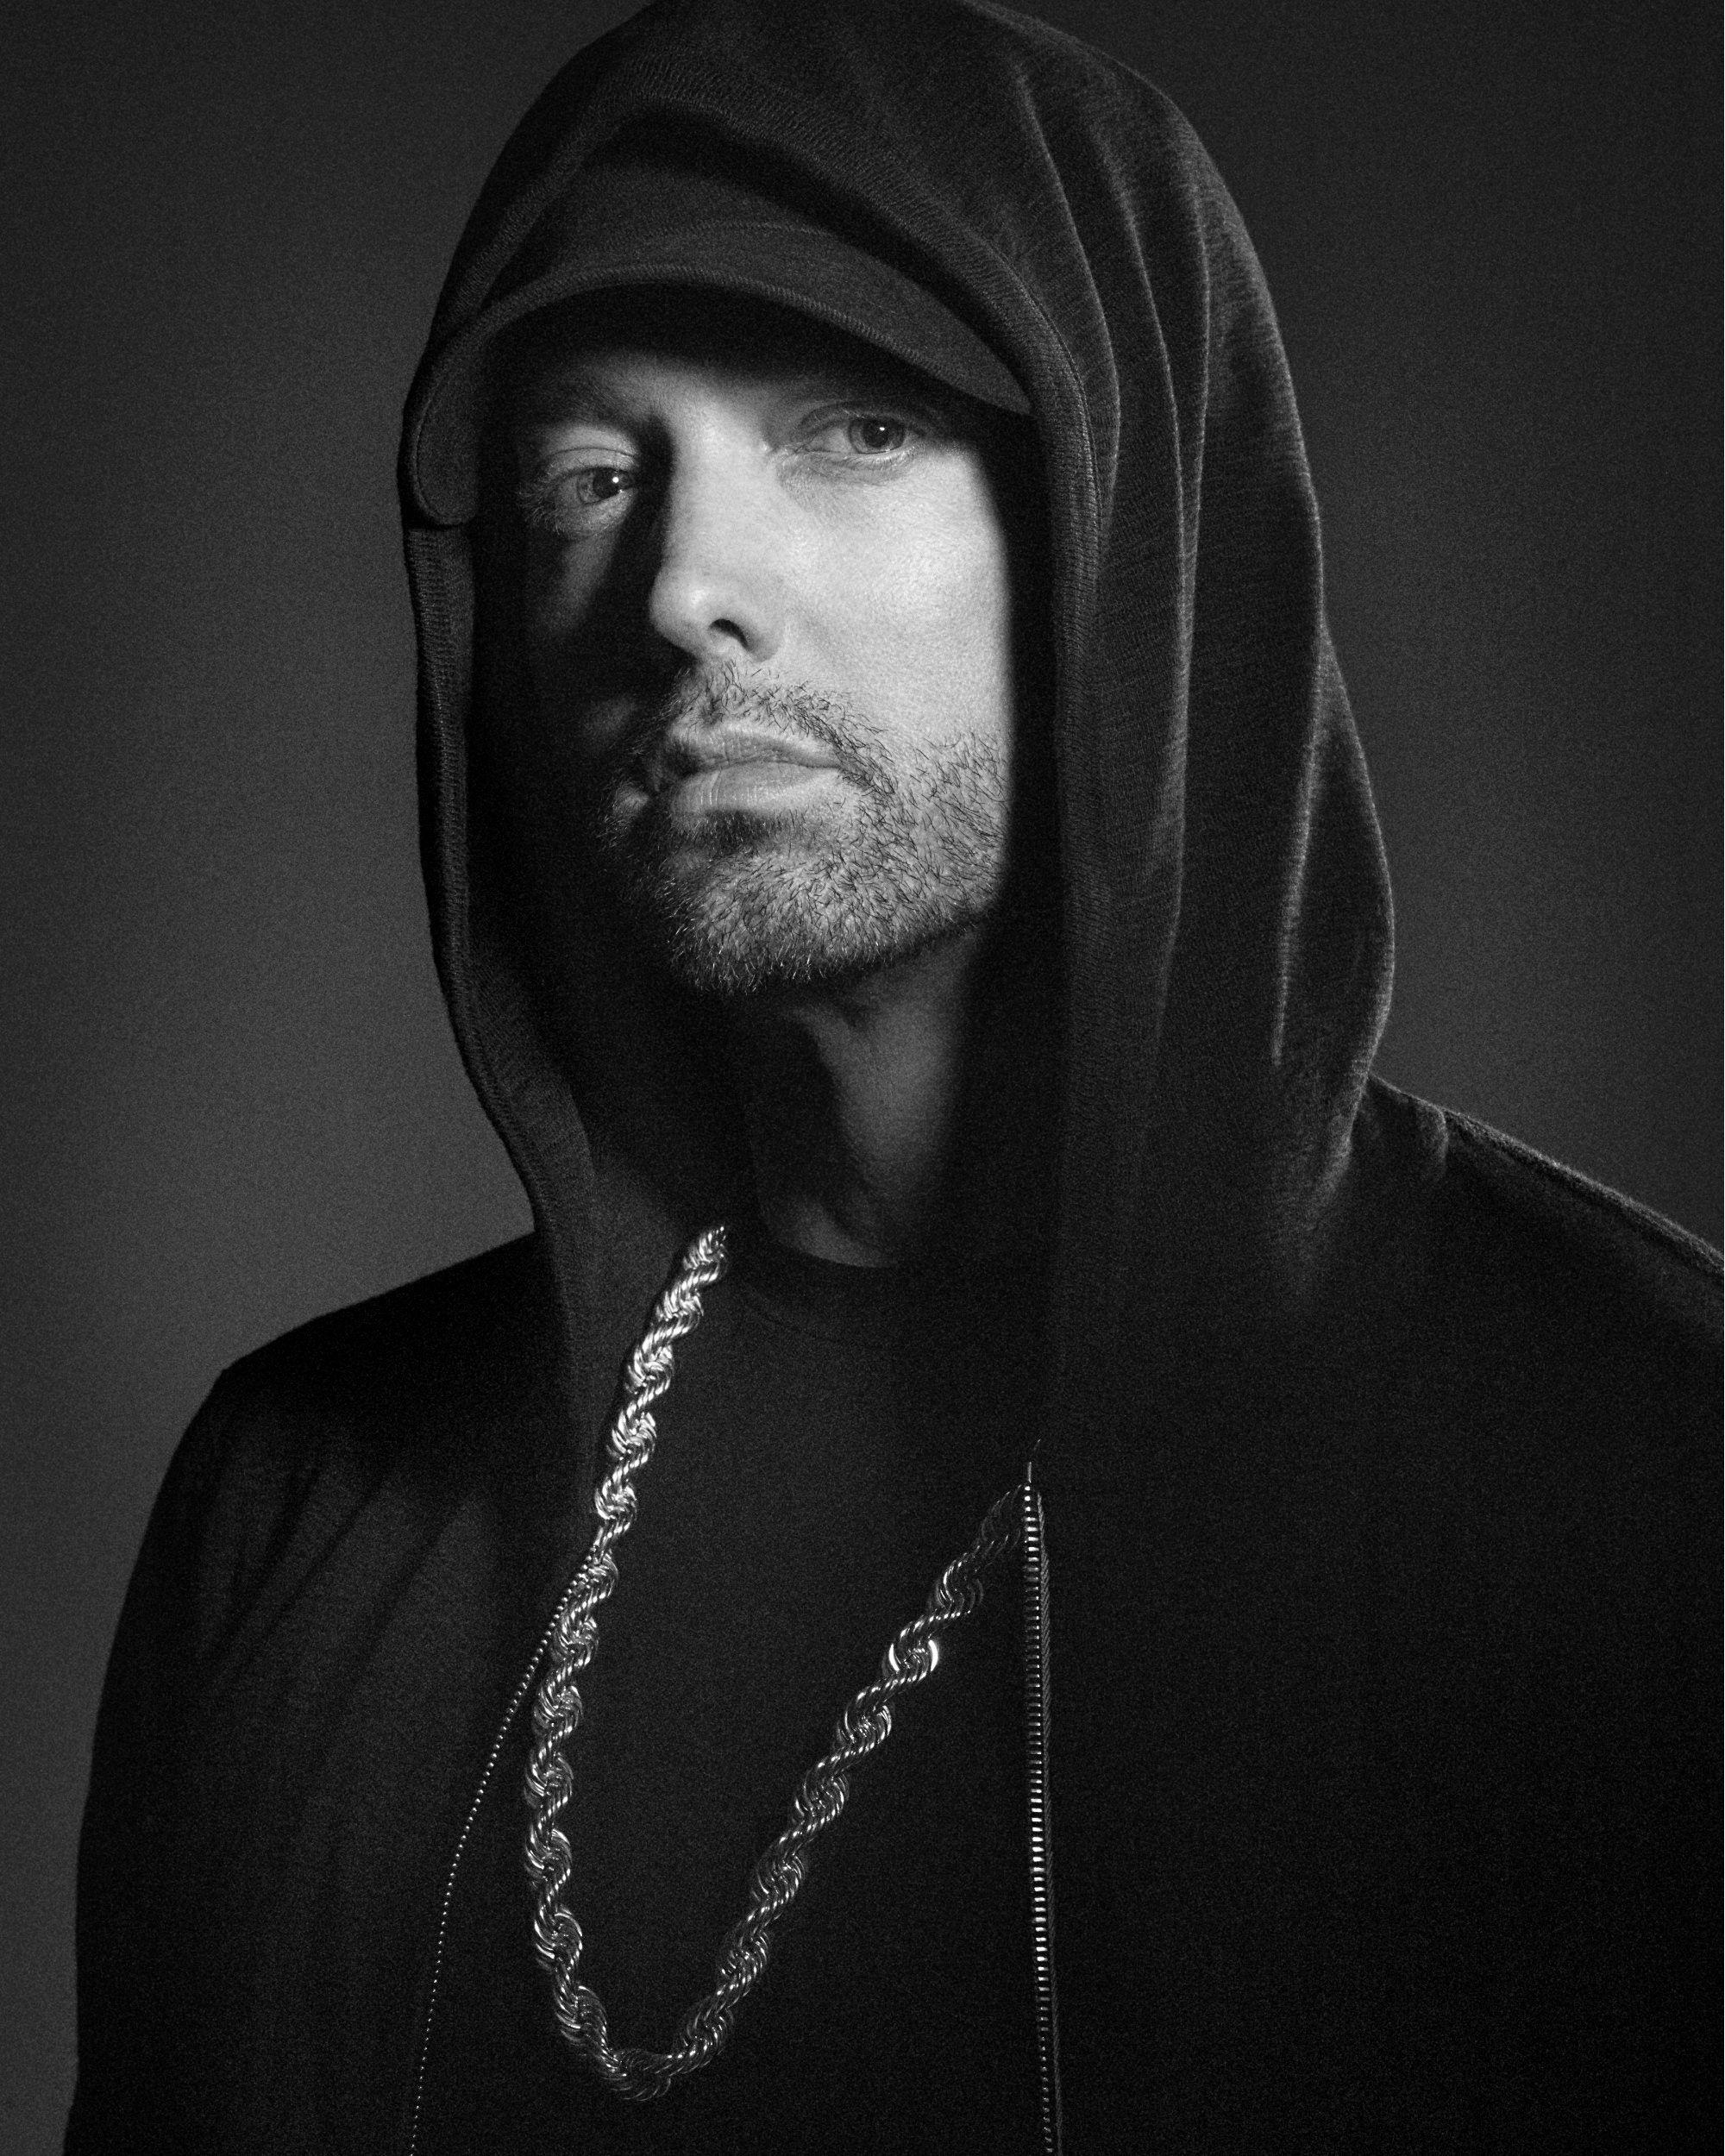 Eminem on new album 'Kamikaze': I'm a little more happy when Im